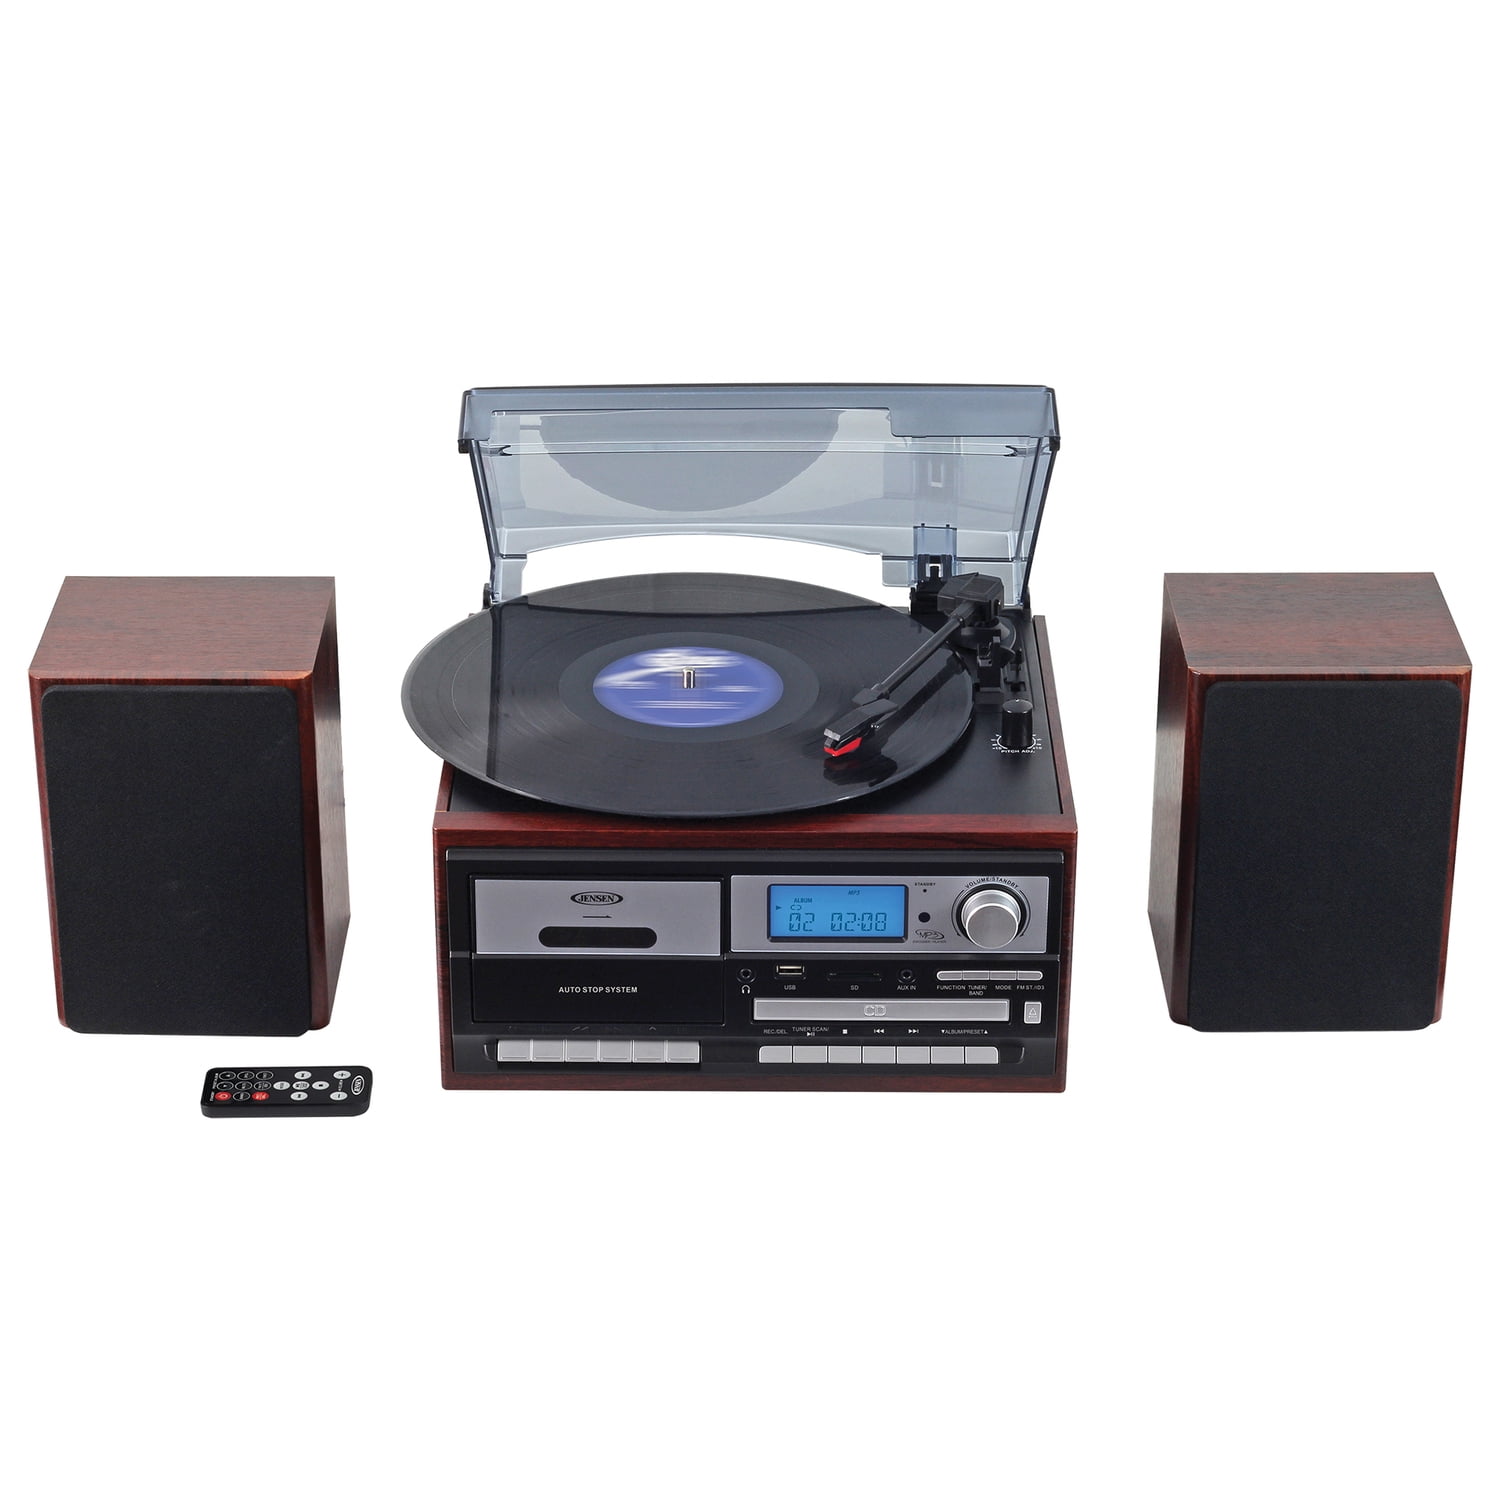 Steepletone Record Player 3 Speed Turntable W/ Speakers FM Radio & USB Transfer 